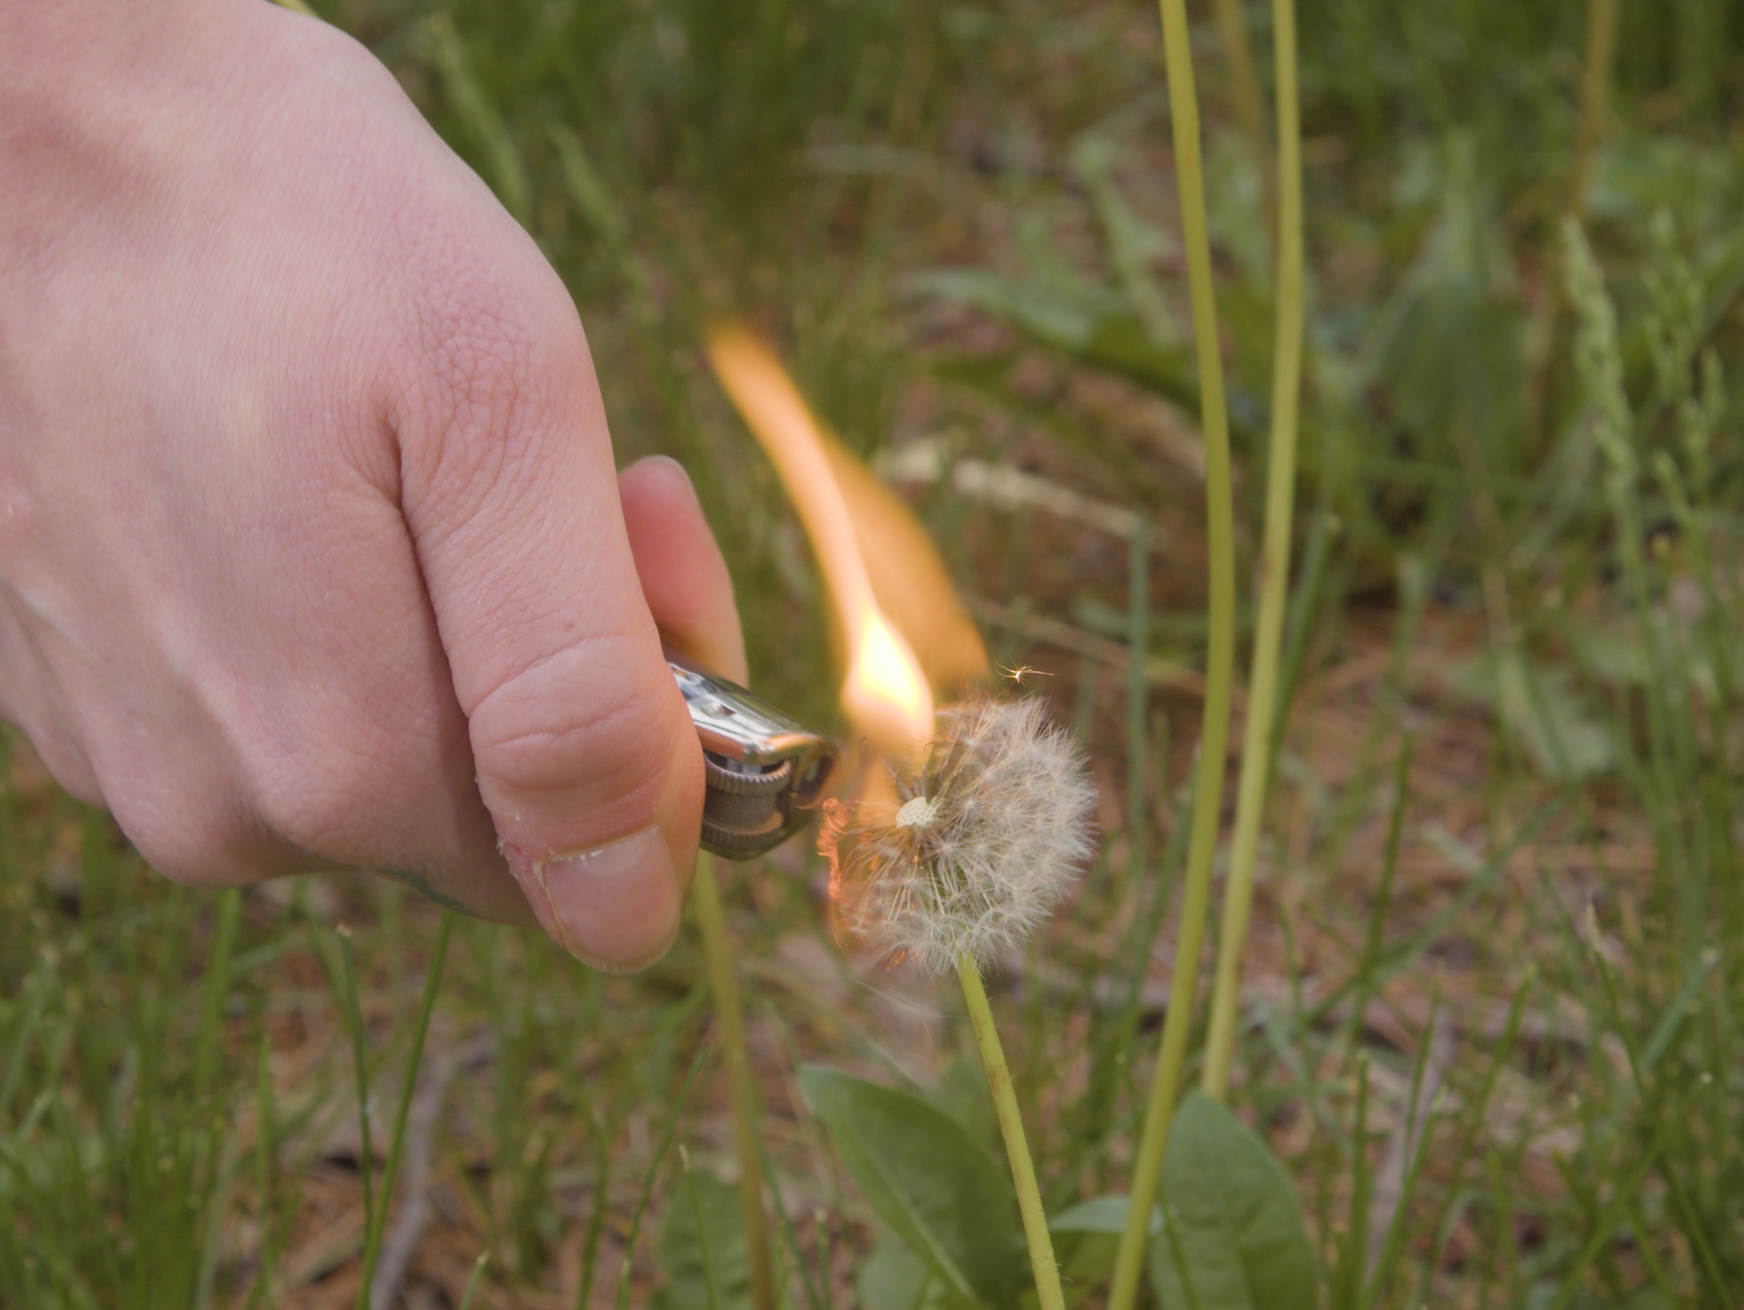 Burning a dandelion.